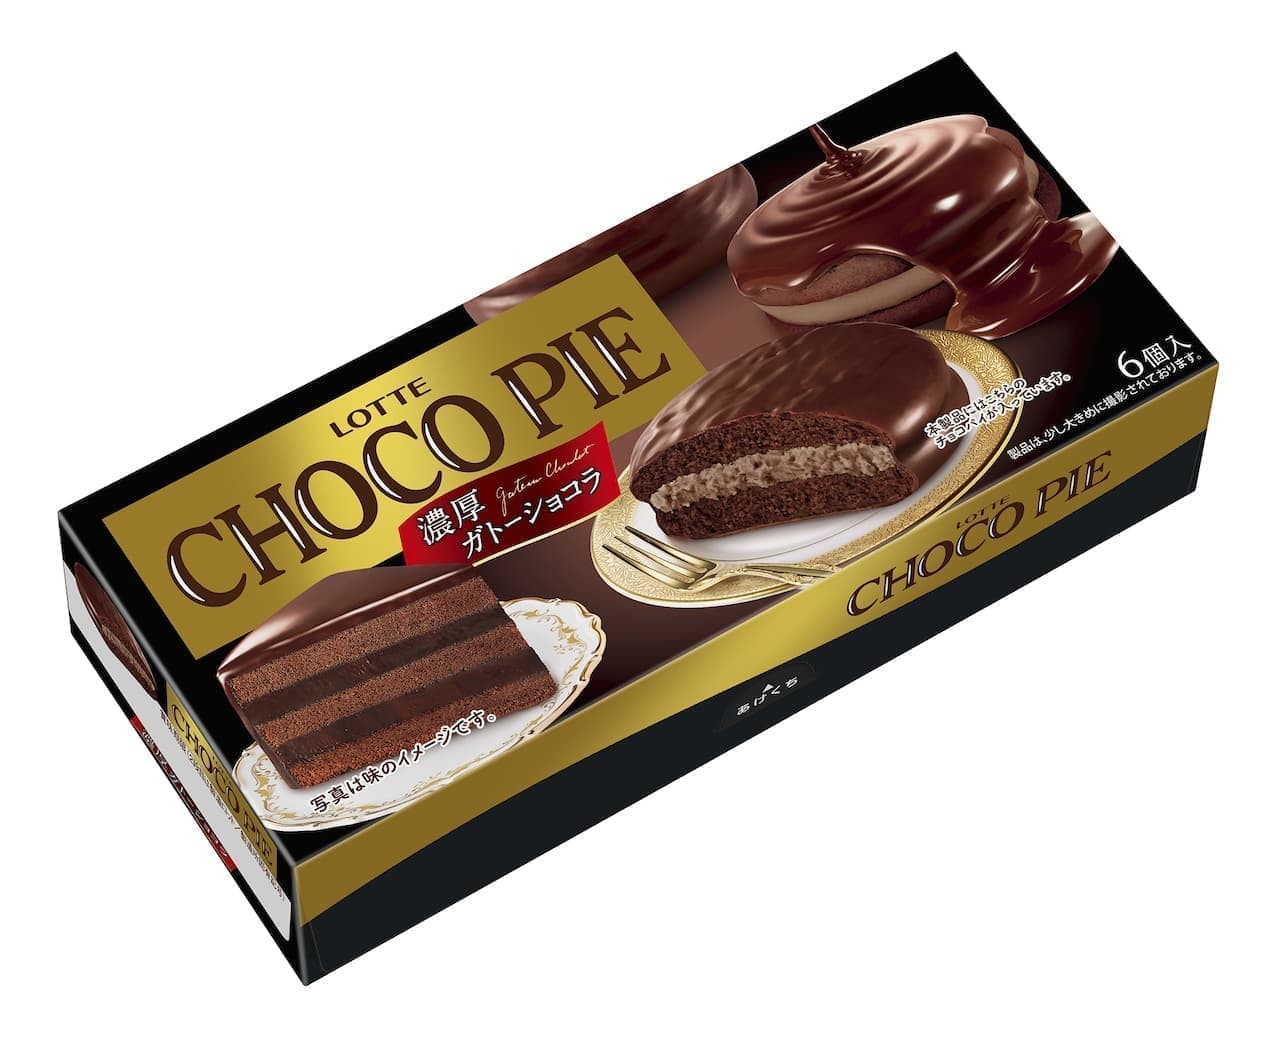 Lotte Choco Pie [Deep Chocolate Chocolat].